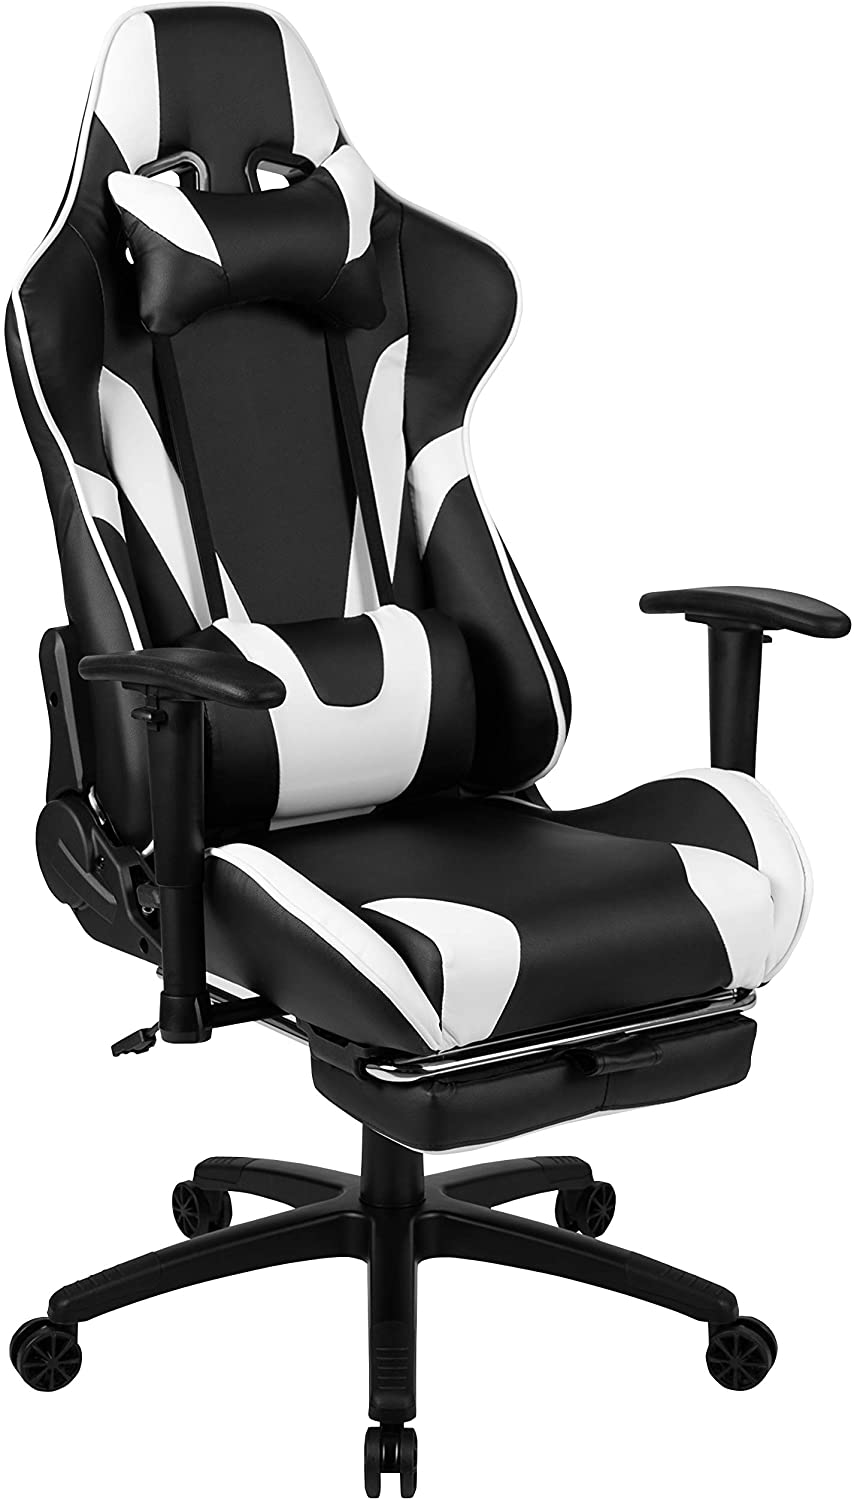 Flash Furniture X30 Gaming Chair